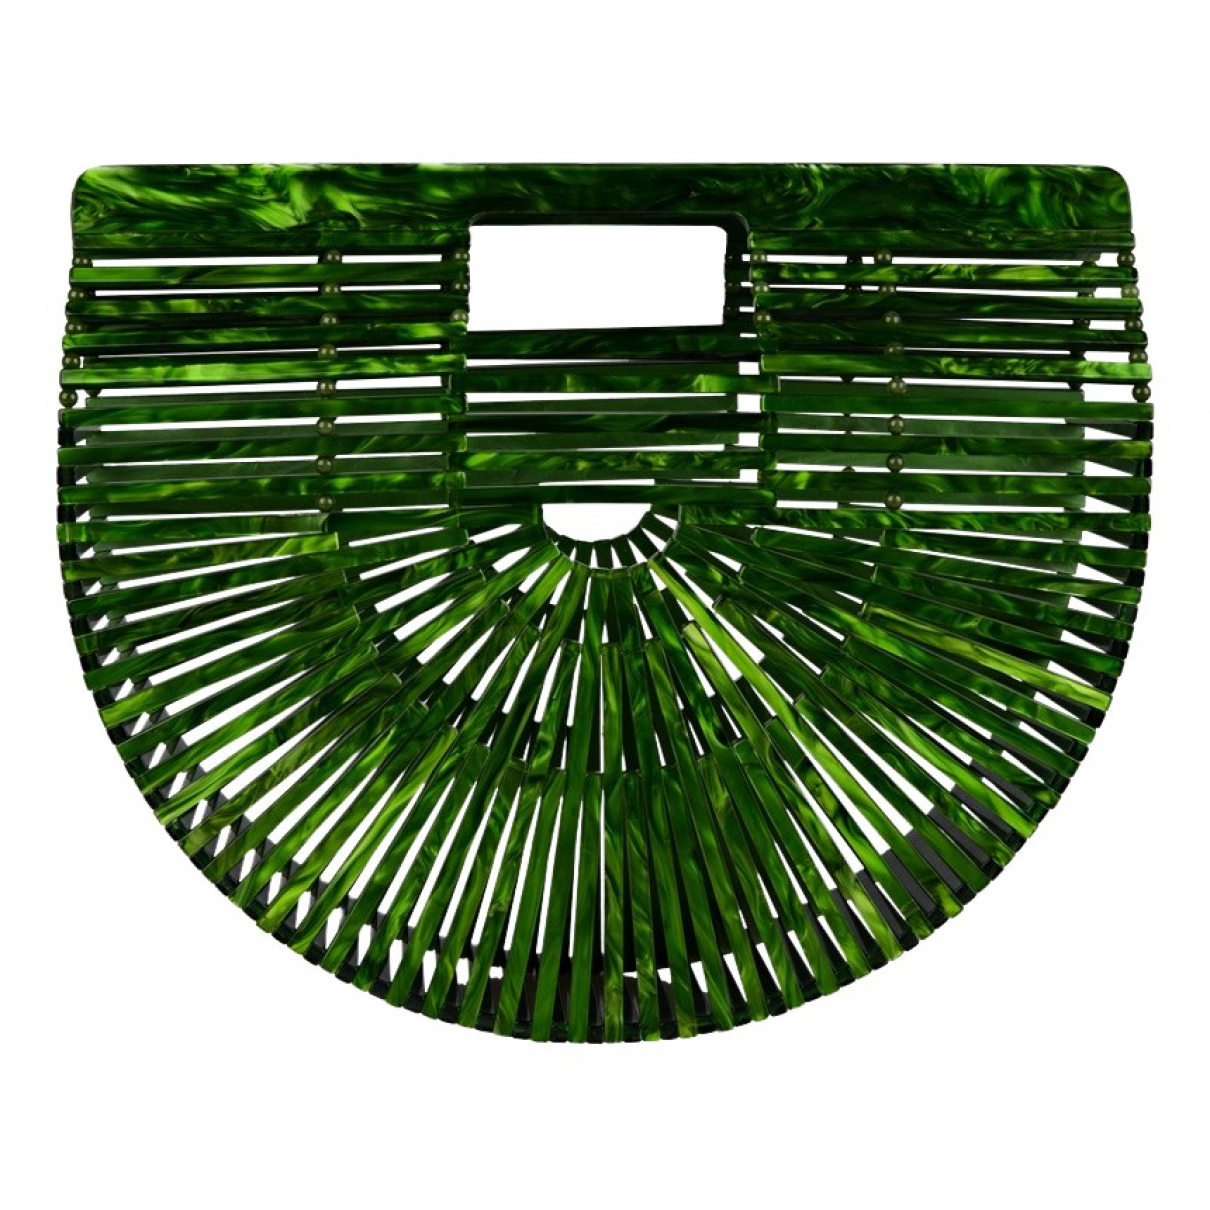 Cult Gaia Gaia's Ark Green Plastic Handbags | Vestiaire Collective (Global)